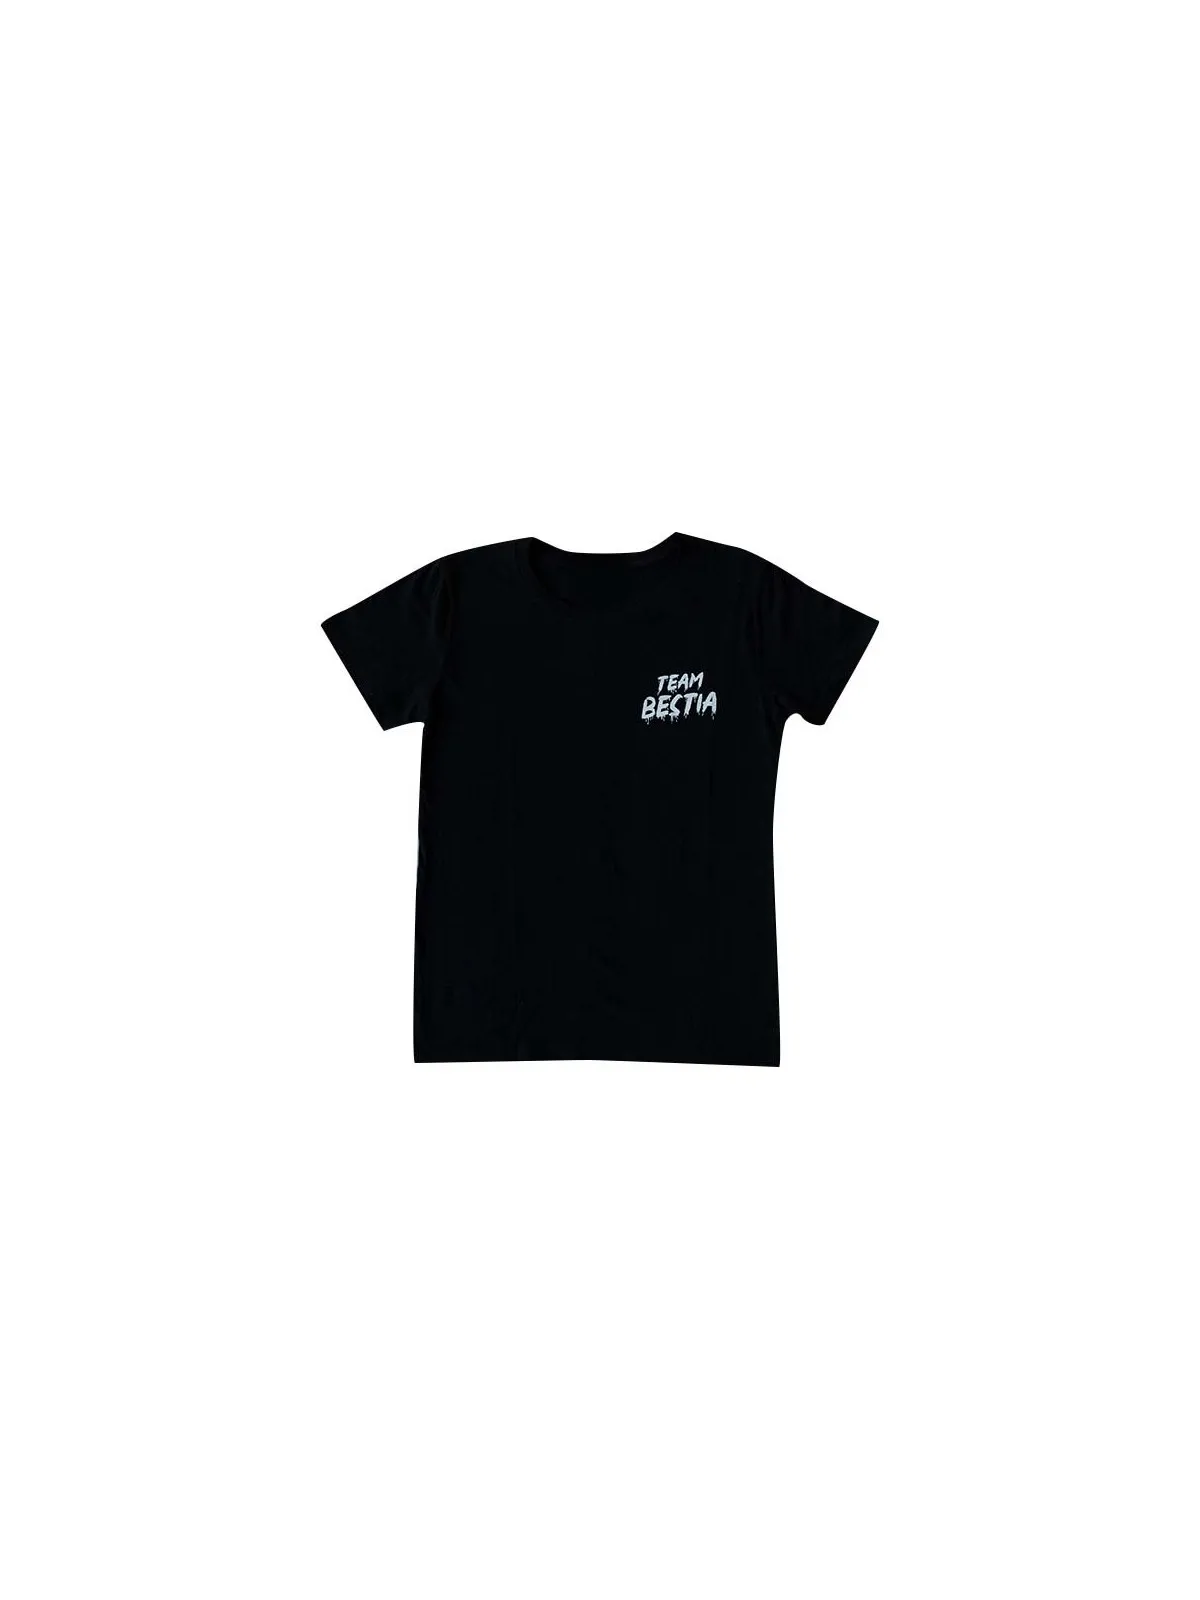 Damski T-shirt TEAM BESTIA Czarno-biały